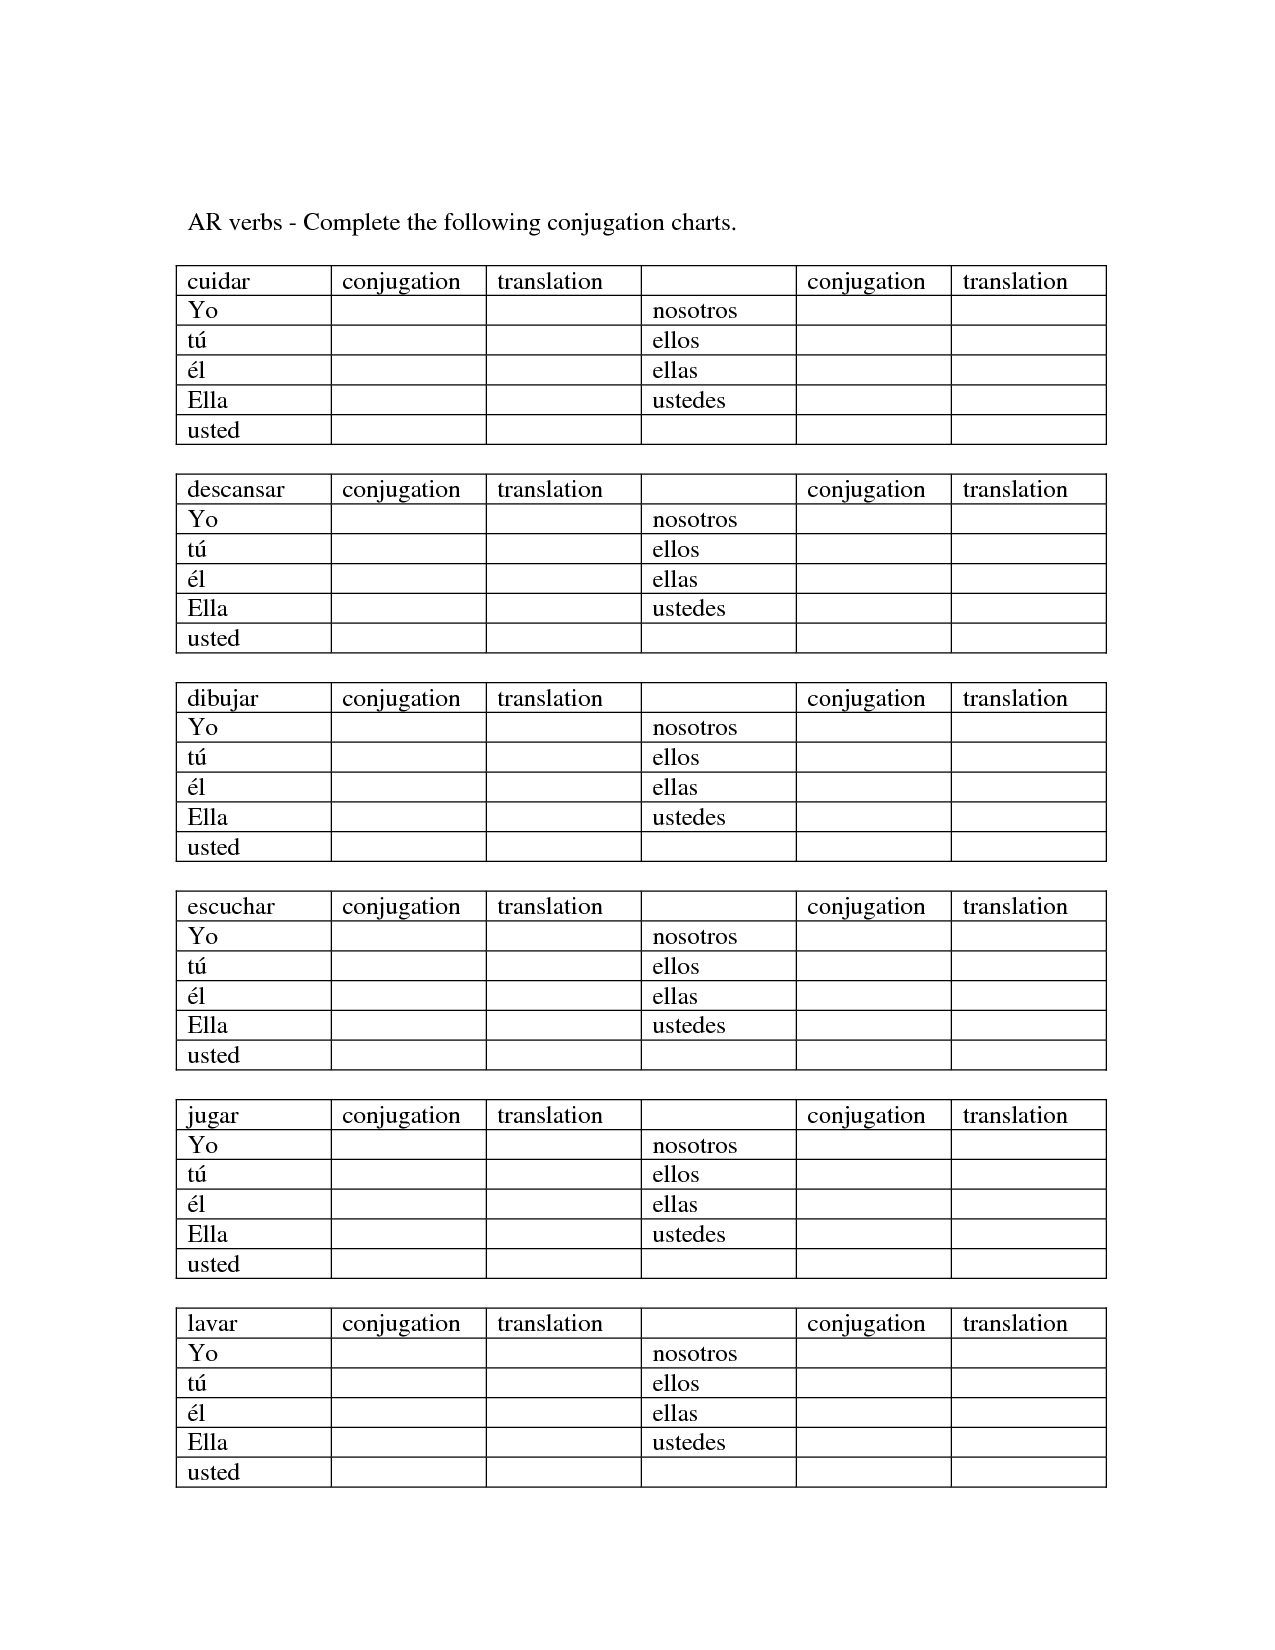 verb-conjugation-ar-pattern-spanish4kiddos-educational-services